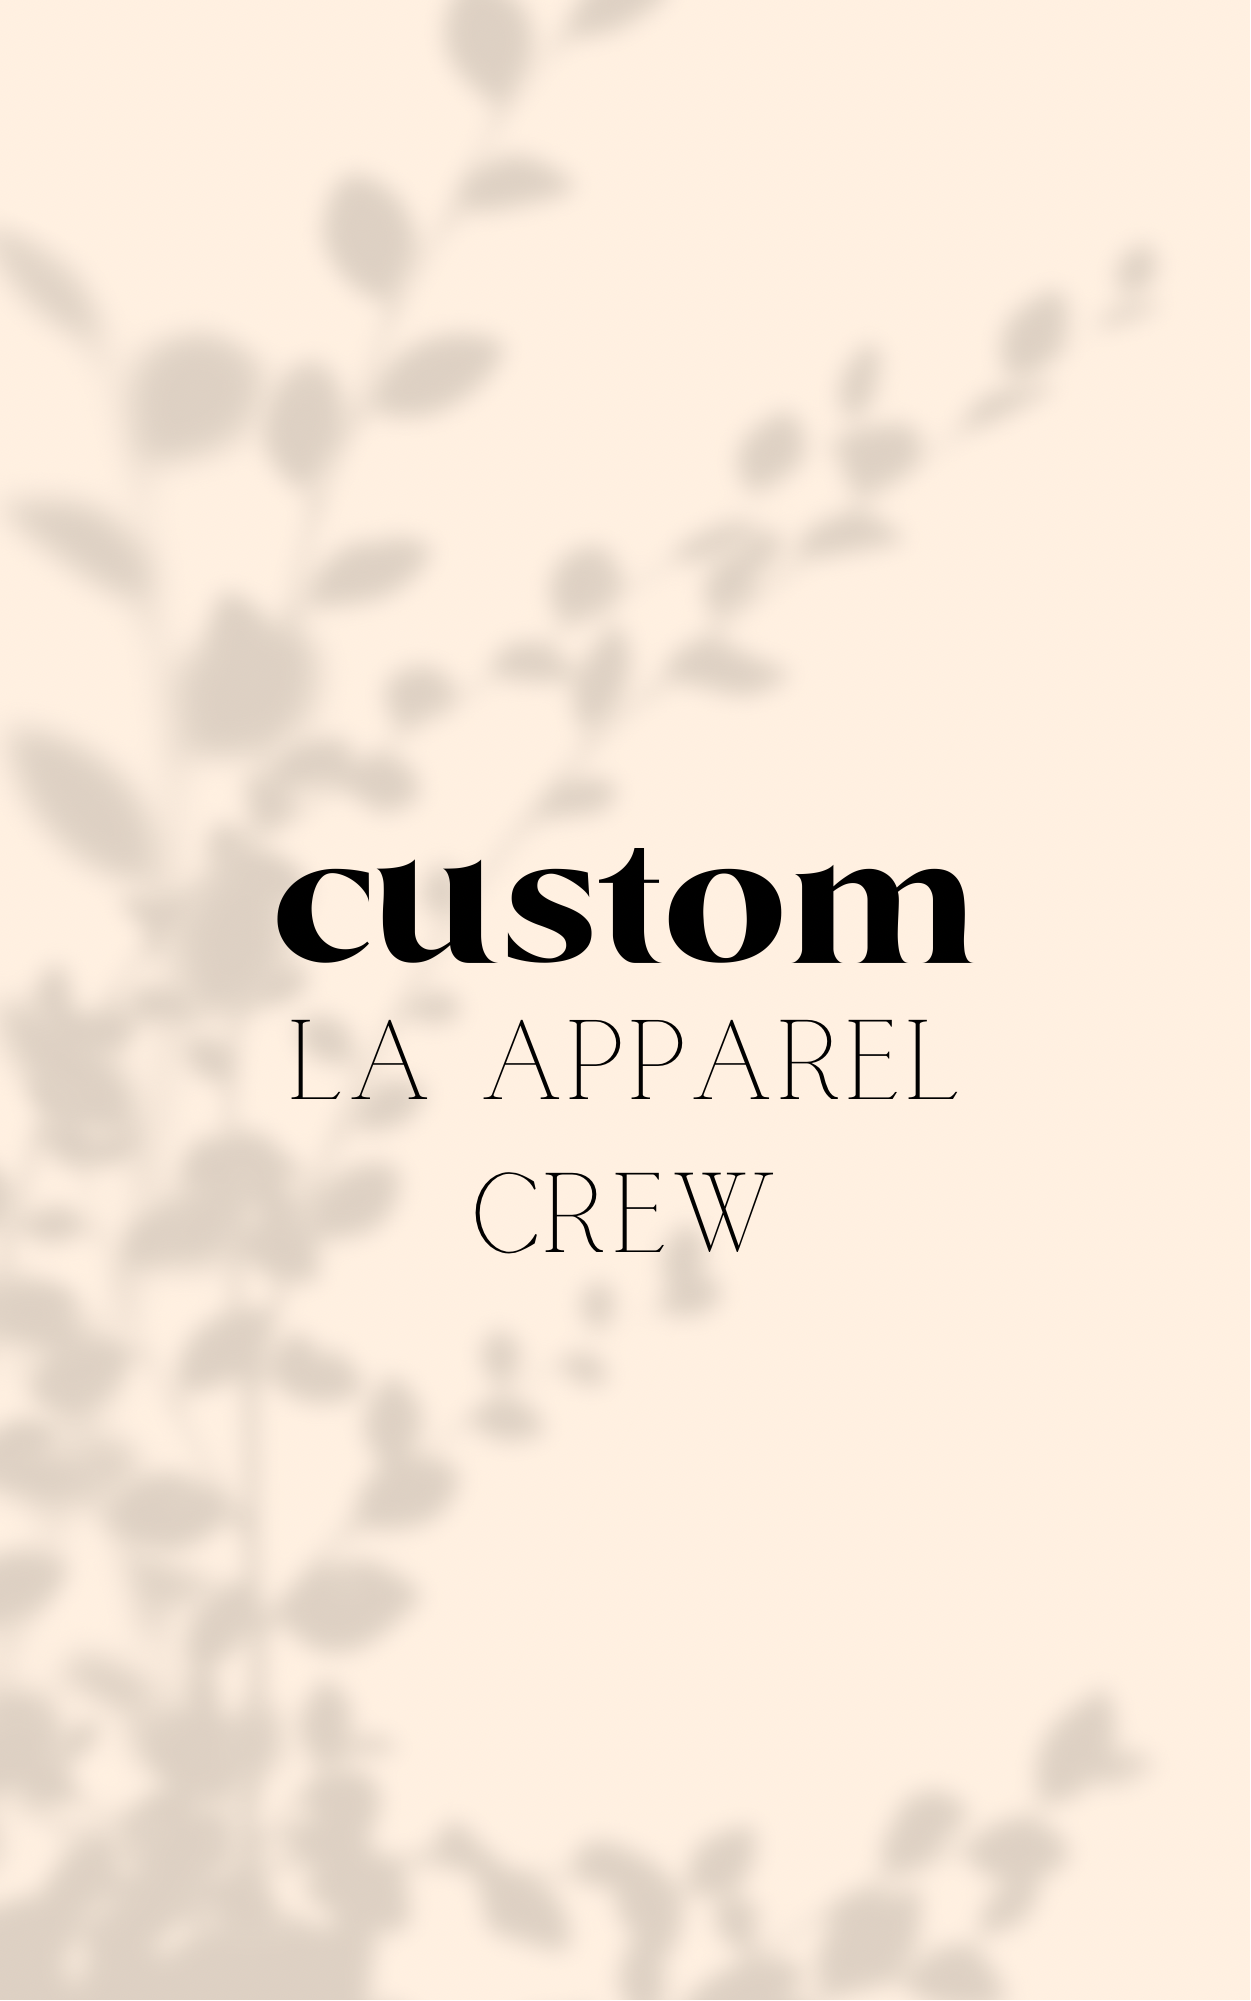 Custom crew (LA Brand)